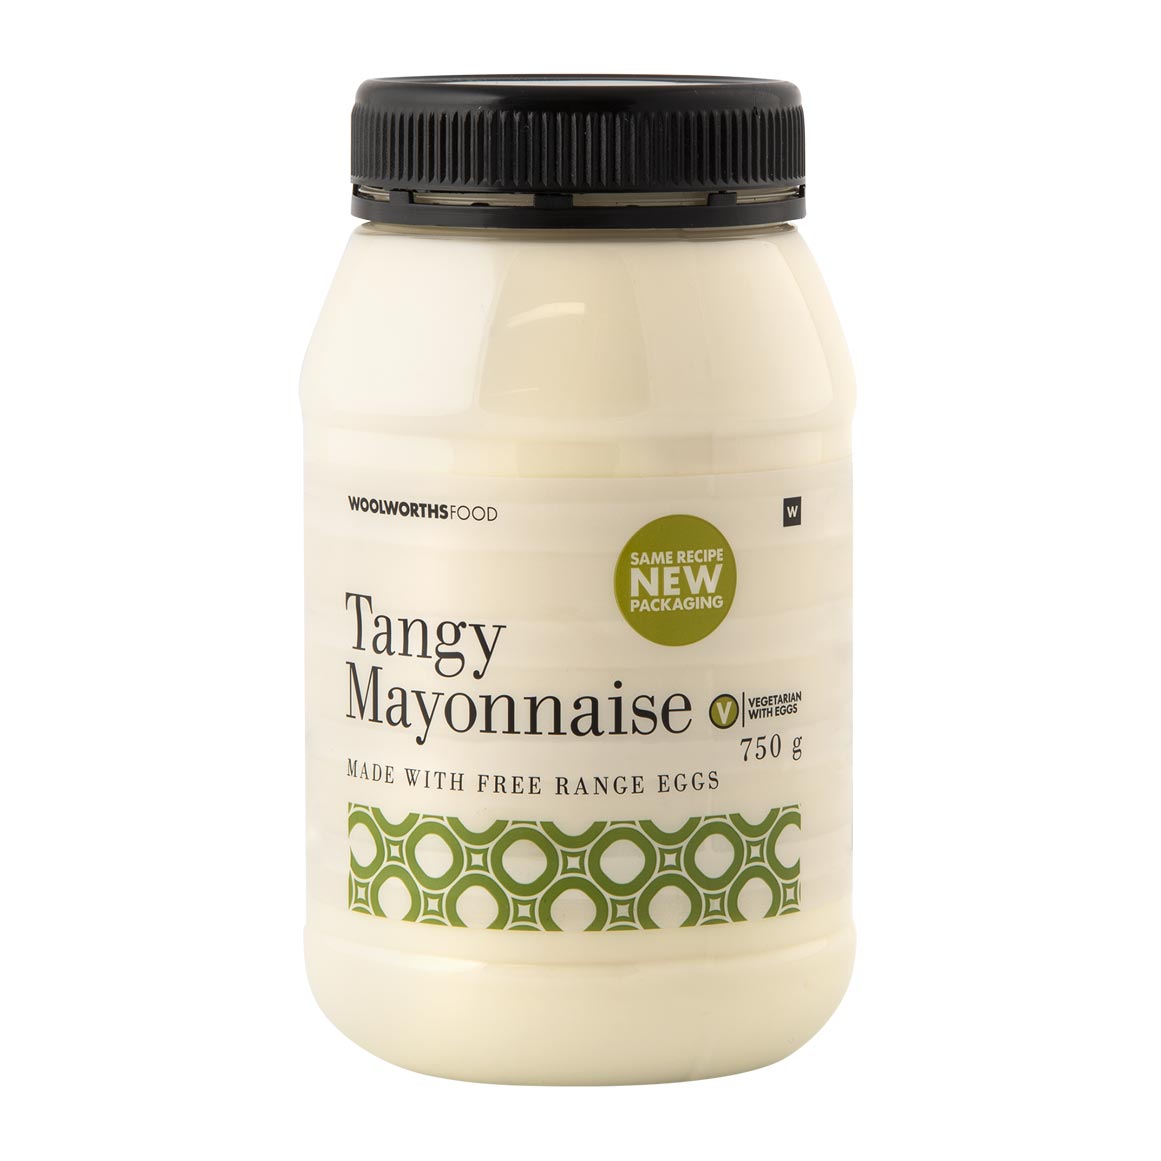 Tangy Mayonnaise 750 G 20130732 ?V=vmGF&o=eyJidWNrZXQiOiJ3dy1vbmxpbmUtaW1hZ2UtcmVzaXplIiwia2V5IjoiaW1hZ2VzL2VsYXN0aWNlcmEvcHJvZHVjdHMvaGVyby8yMDE5LTExLTE0LzIwMTMwNzMyX2hlcm8uanBnIn0&